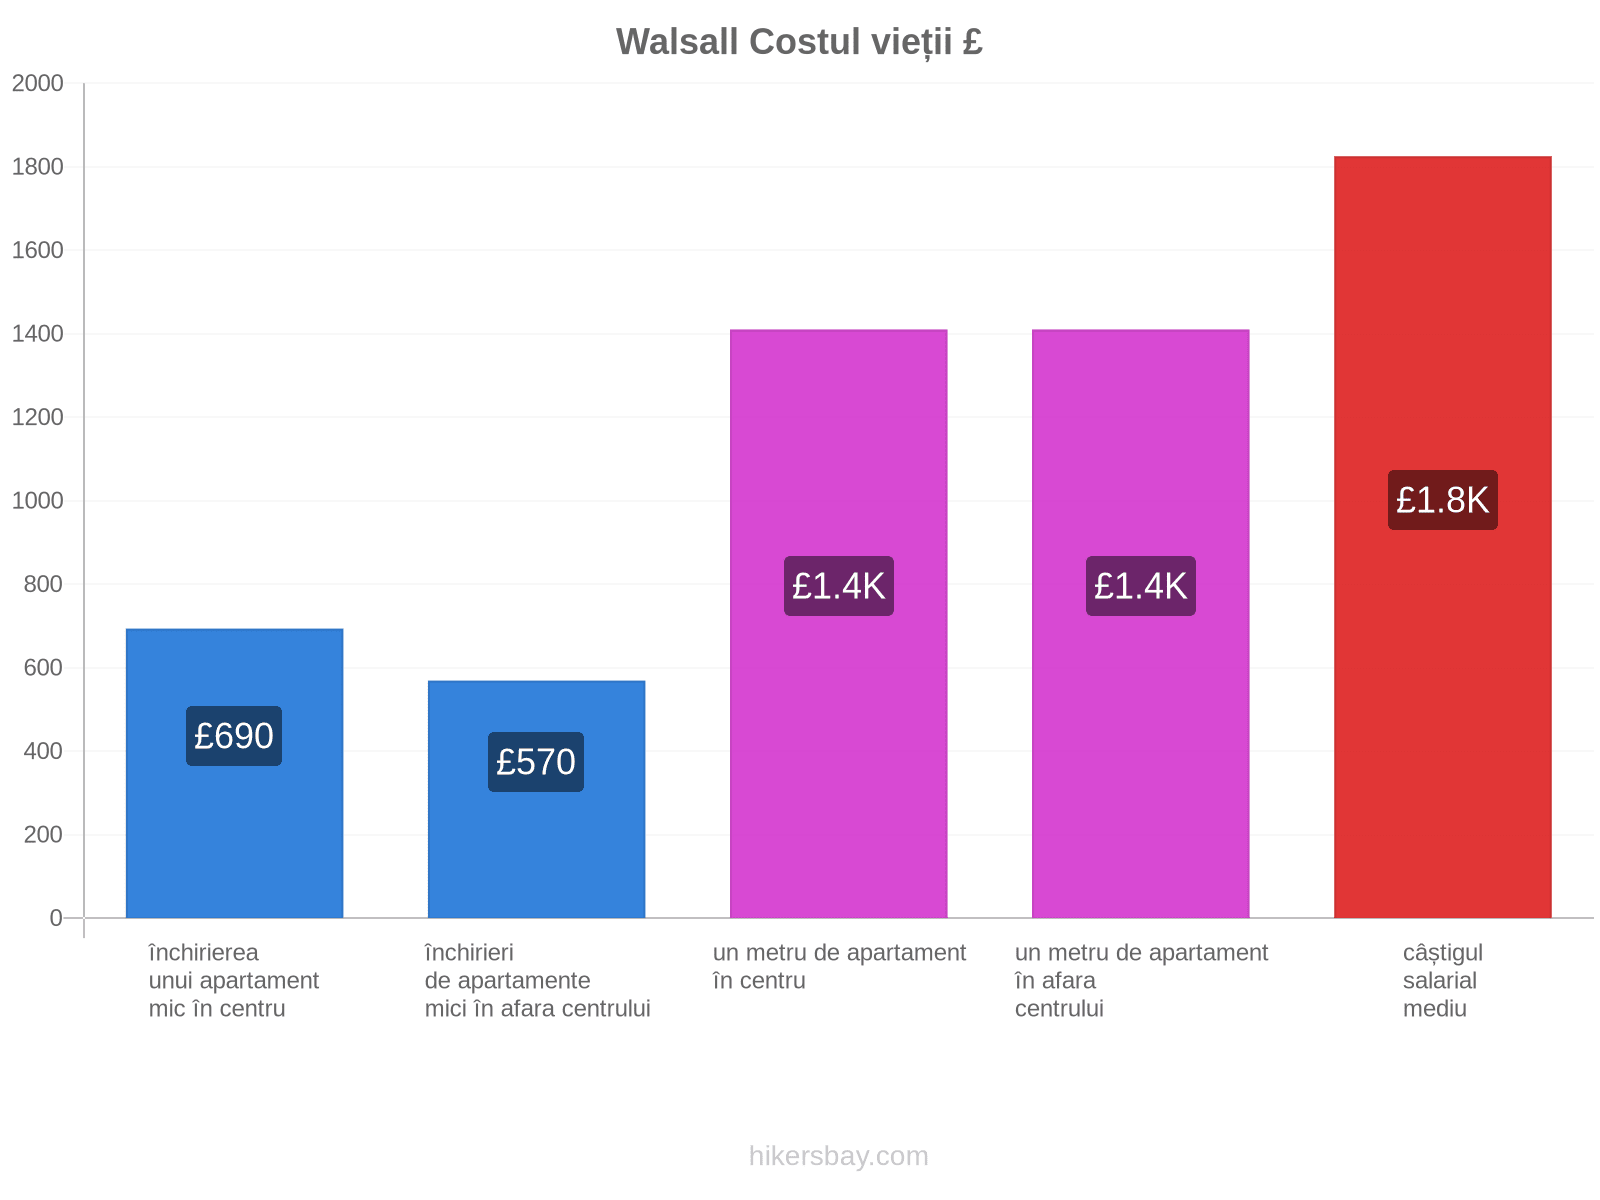 Walsall costul vieții hikersbay.com